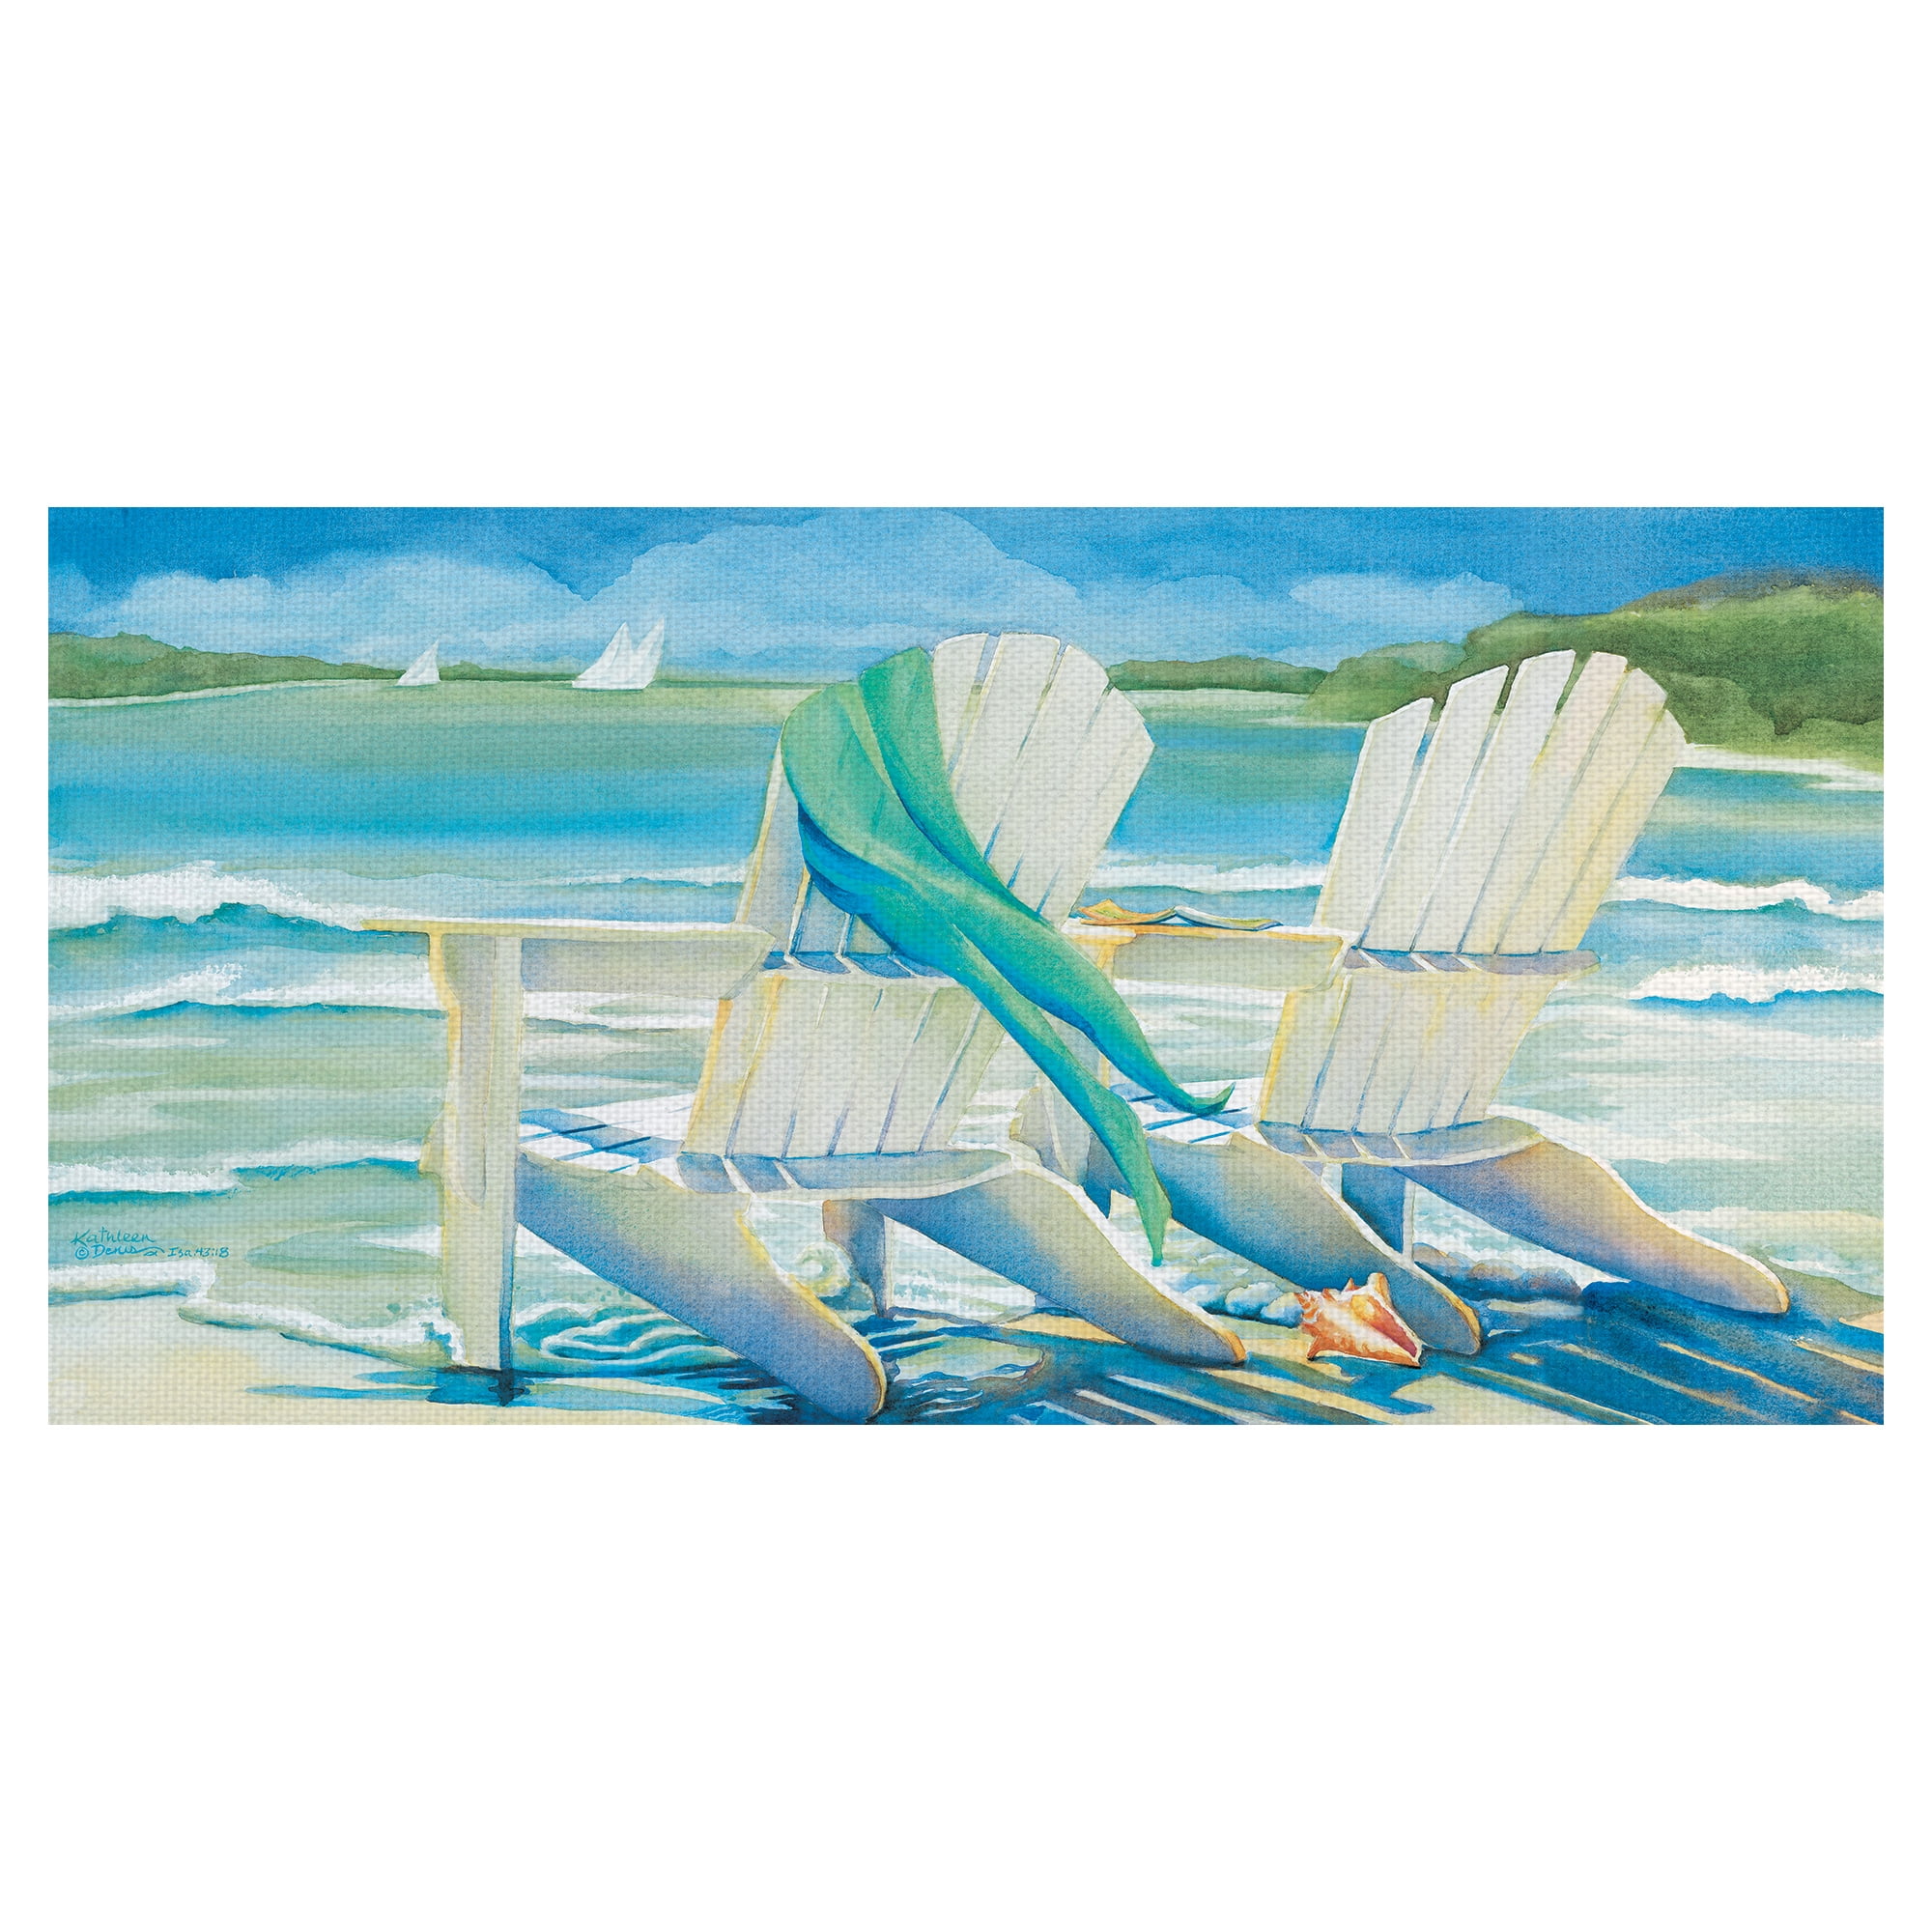 Minimalist Beach Chair Canvas Print for Simple Design